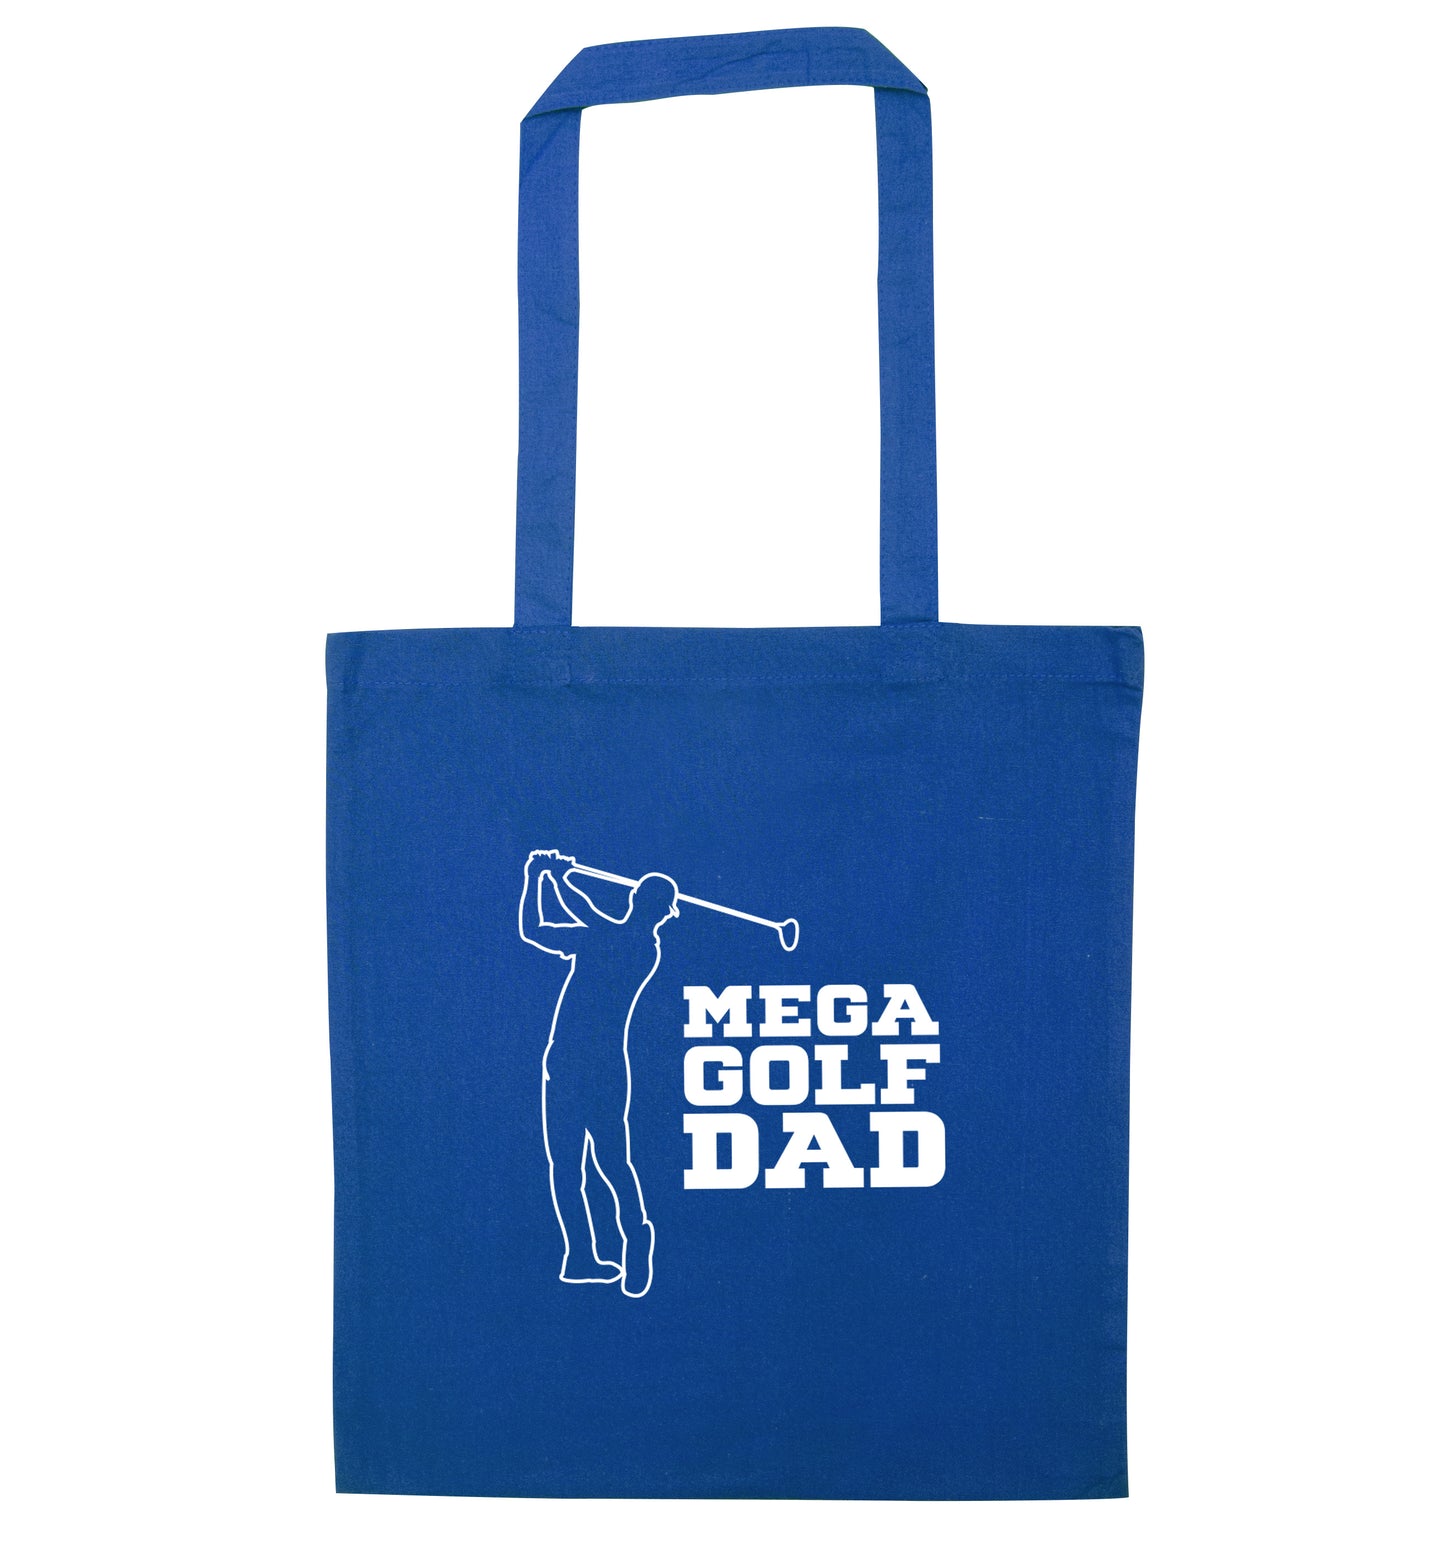 Mega golfing dad blue tote bag